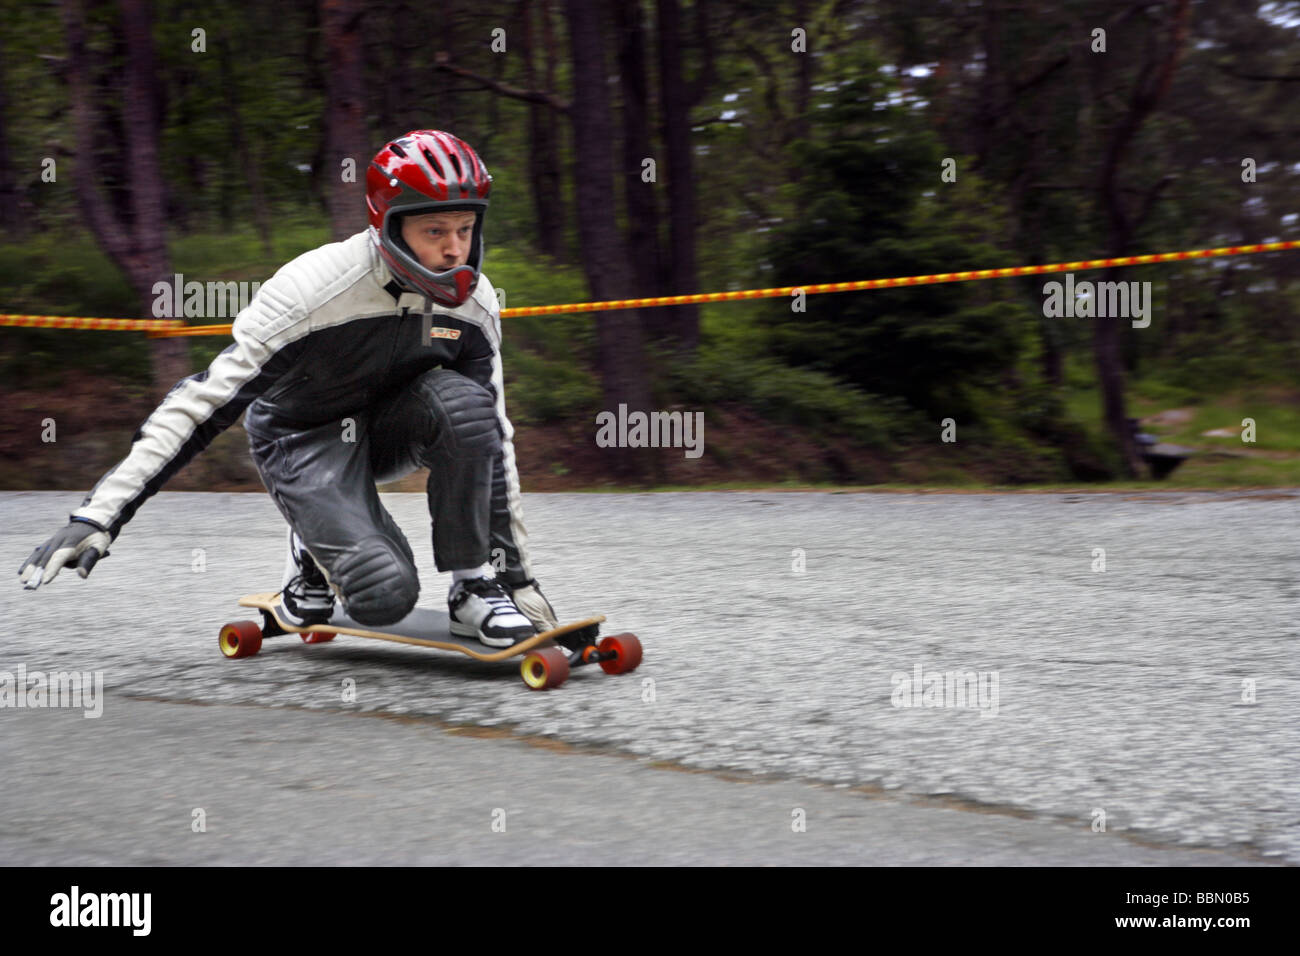 Vitesses Skateboarder courbe route creux Banque D'Images